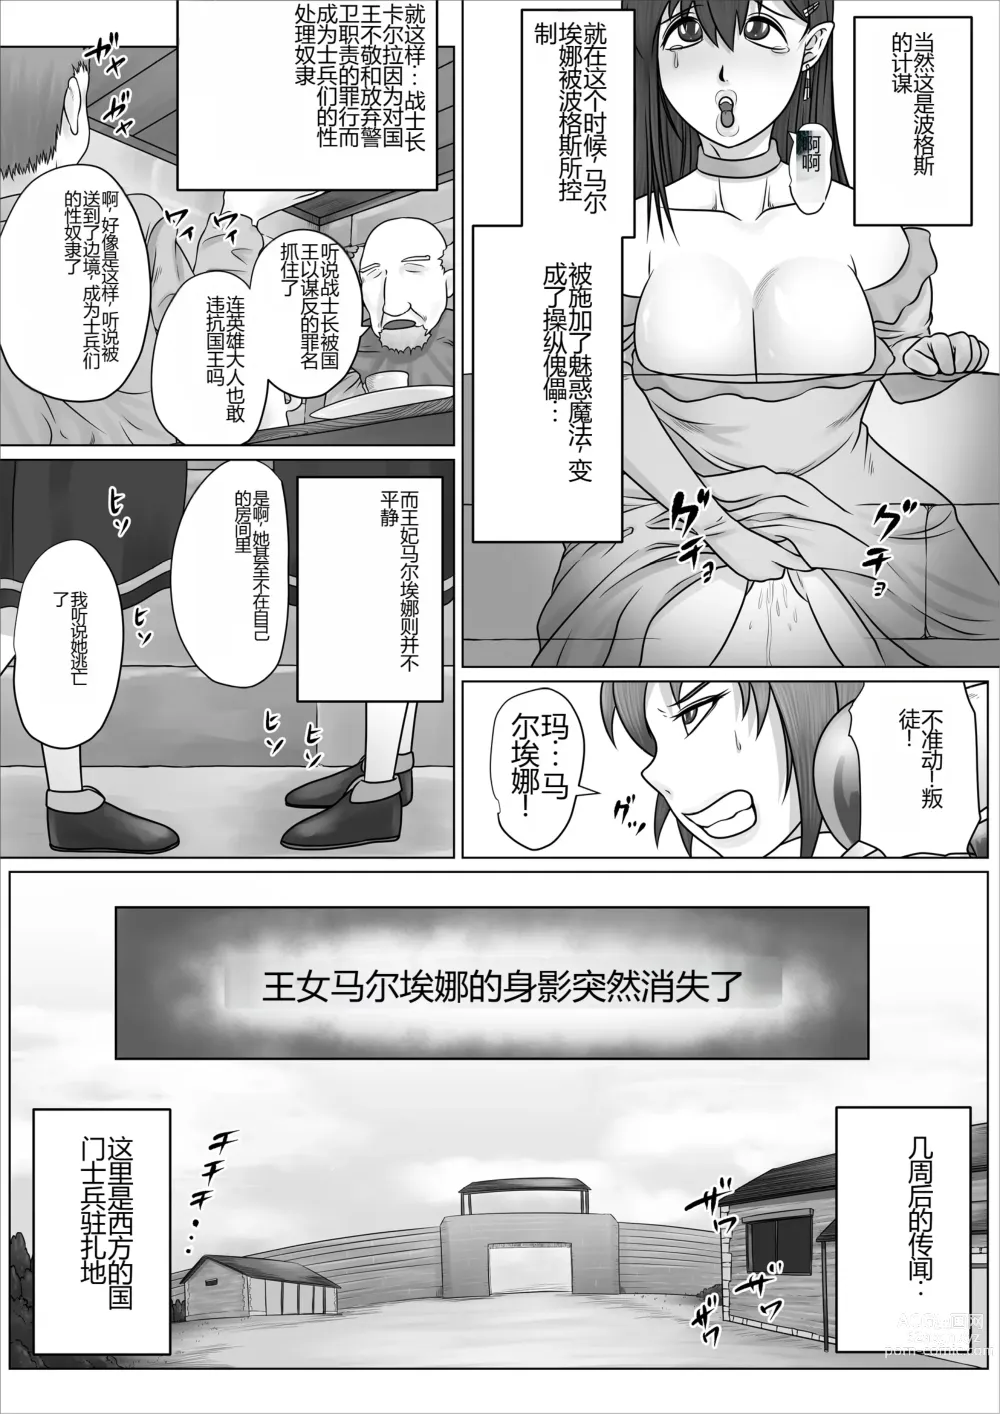 Page 8 of doujinshi 被誉为英雄的女战士长艾尔拉被改造成淫乱的母猪成为一生奉献做为配种精液便器的故事